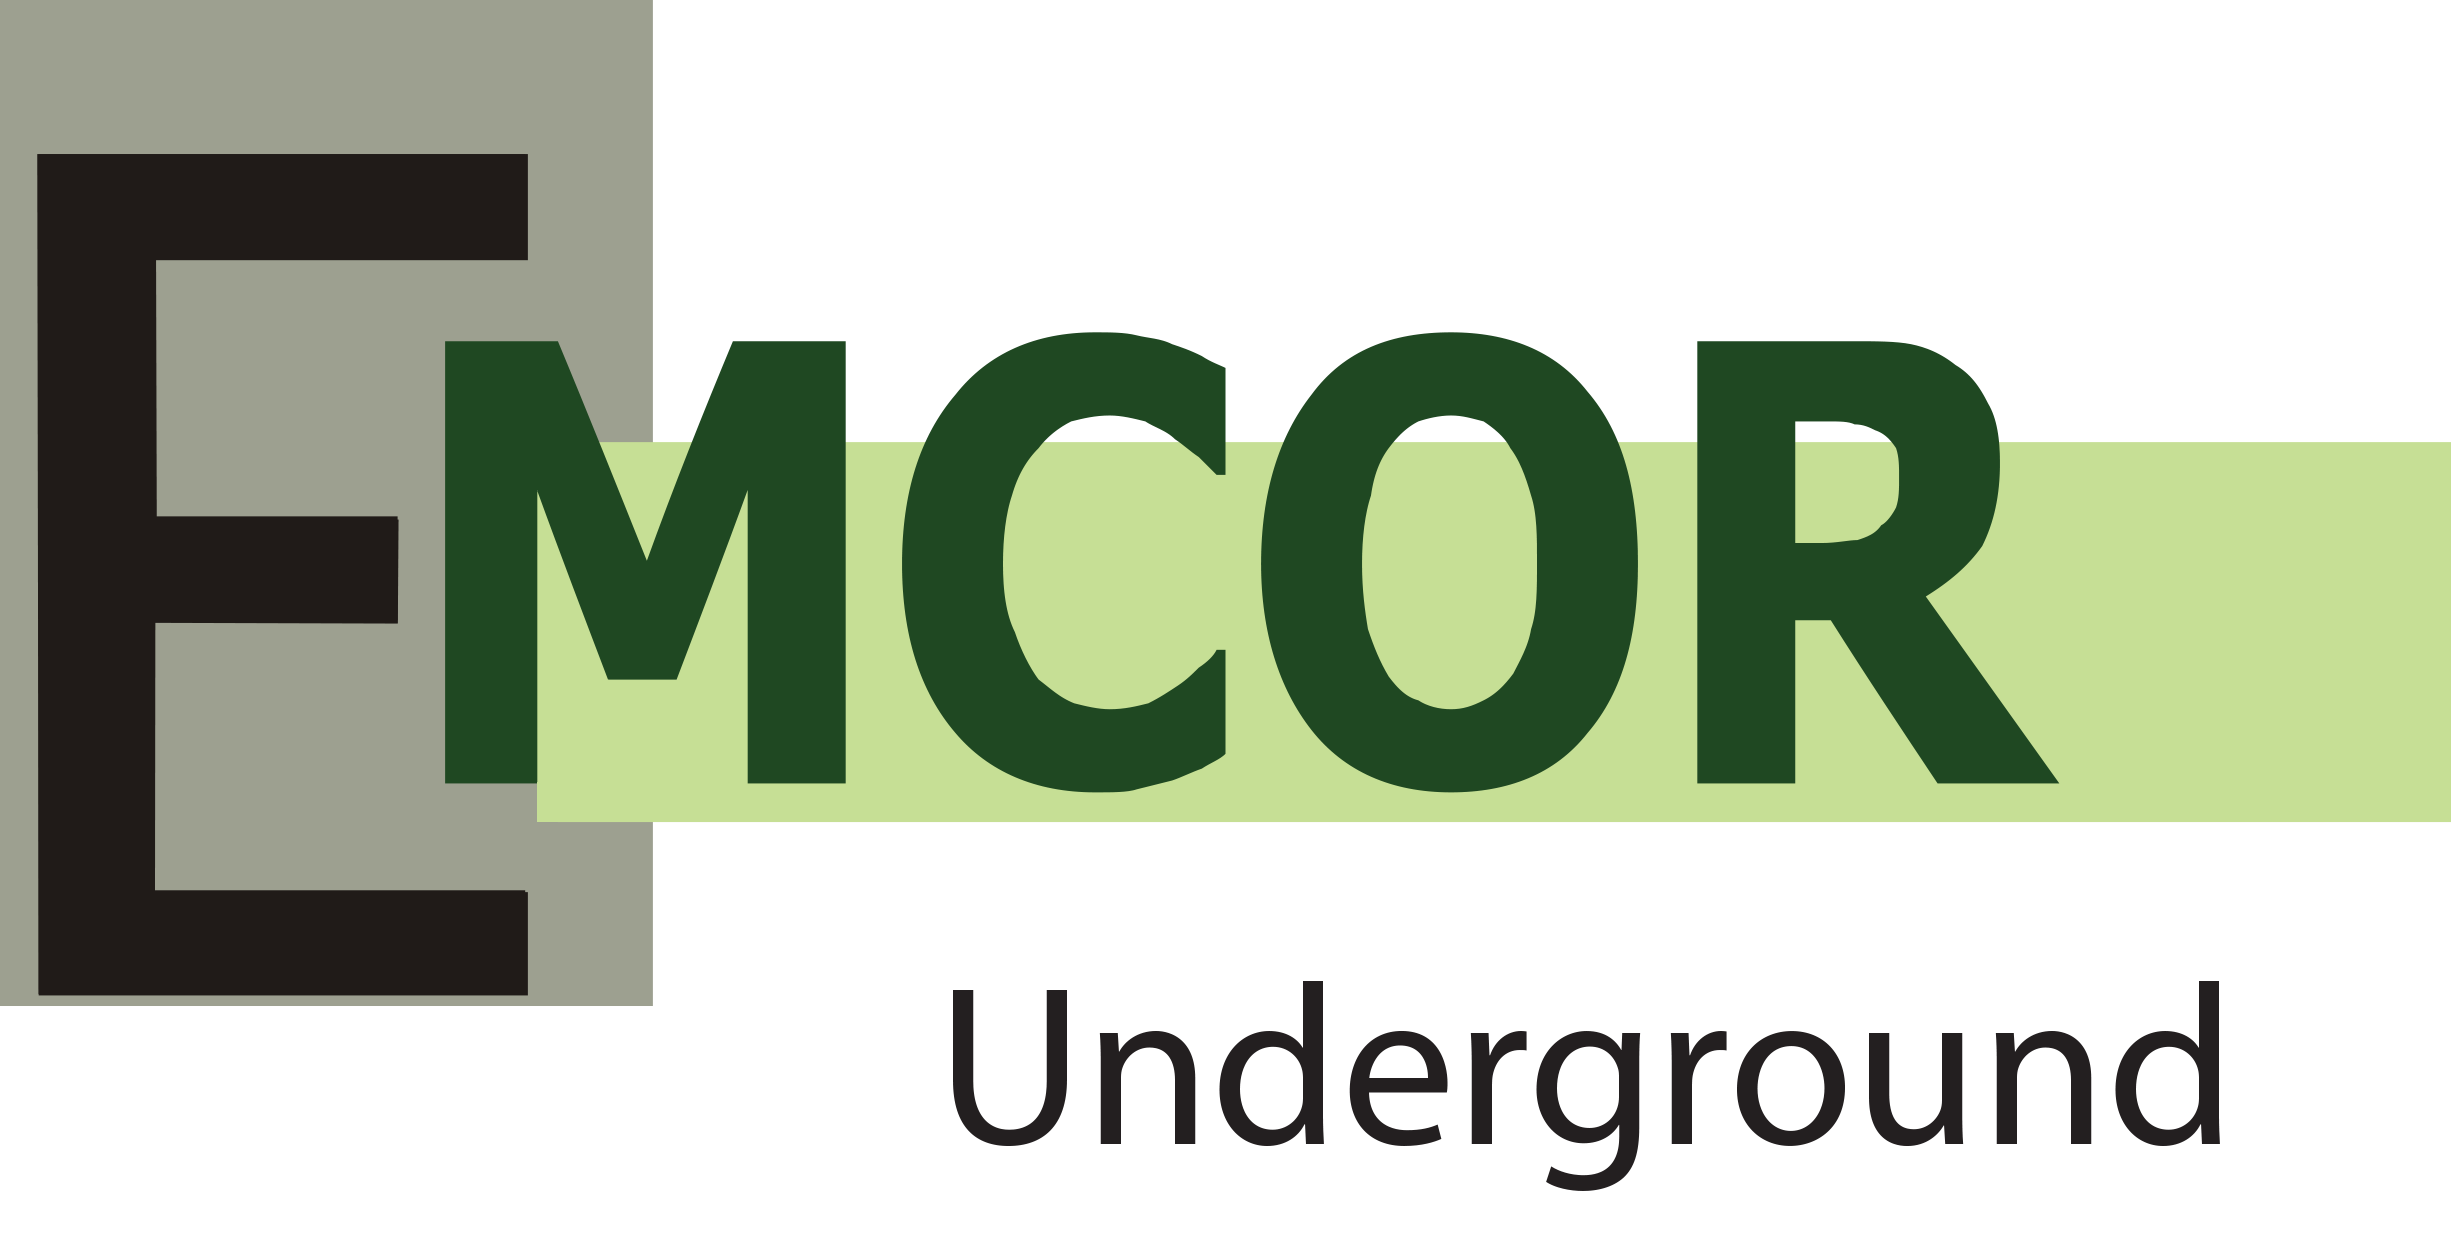 Emcor Underground - Rock Bolts manufacturer